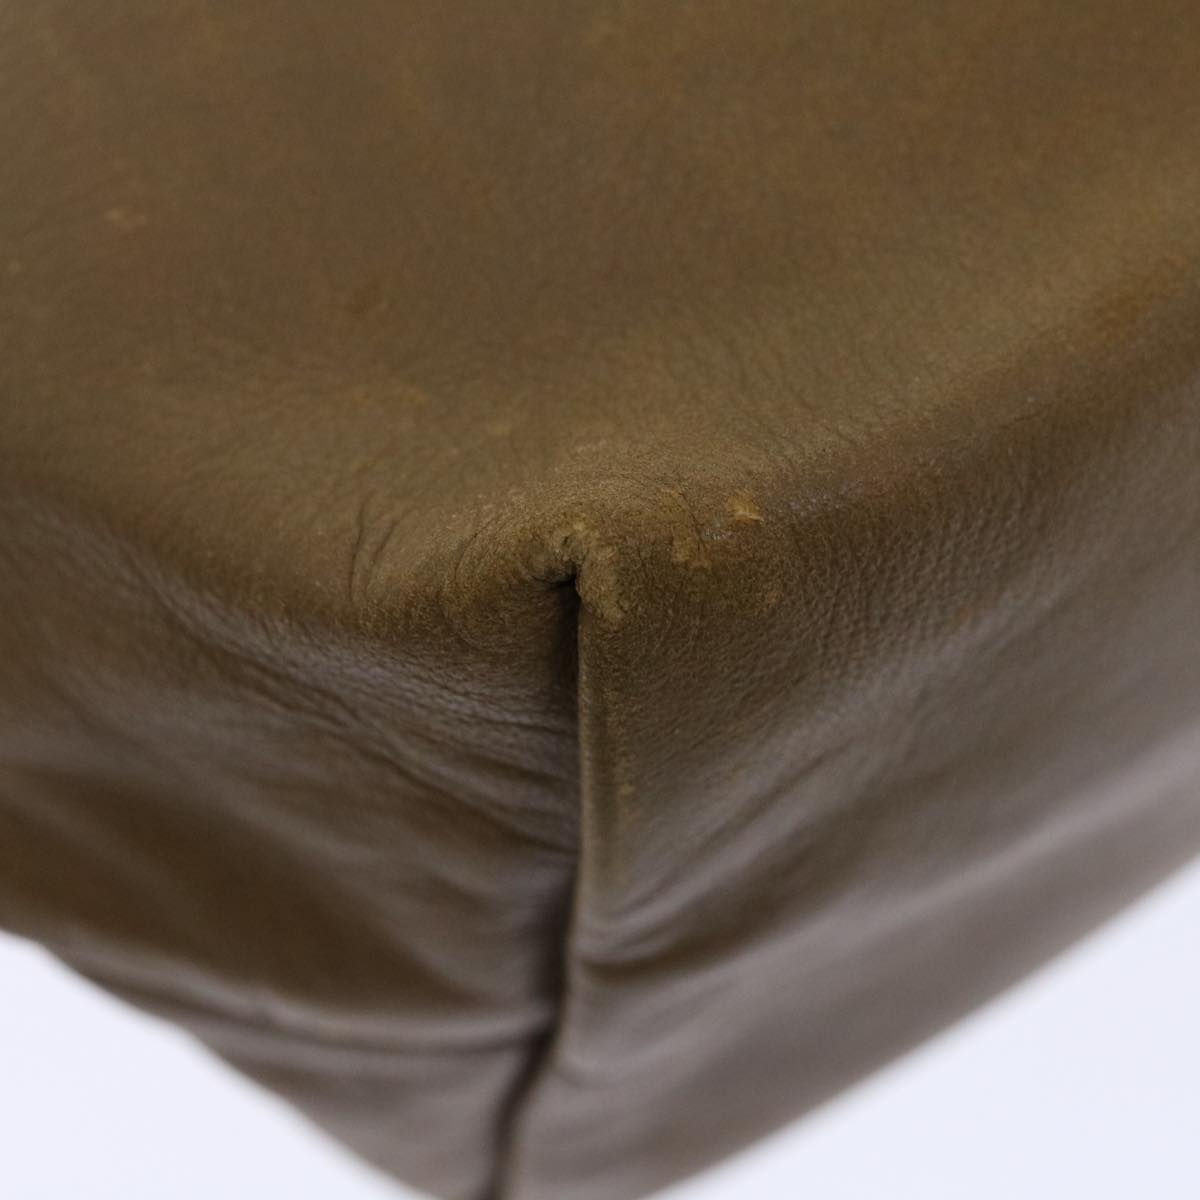 FENDI Tote Bag Leather Beige Auth 67352